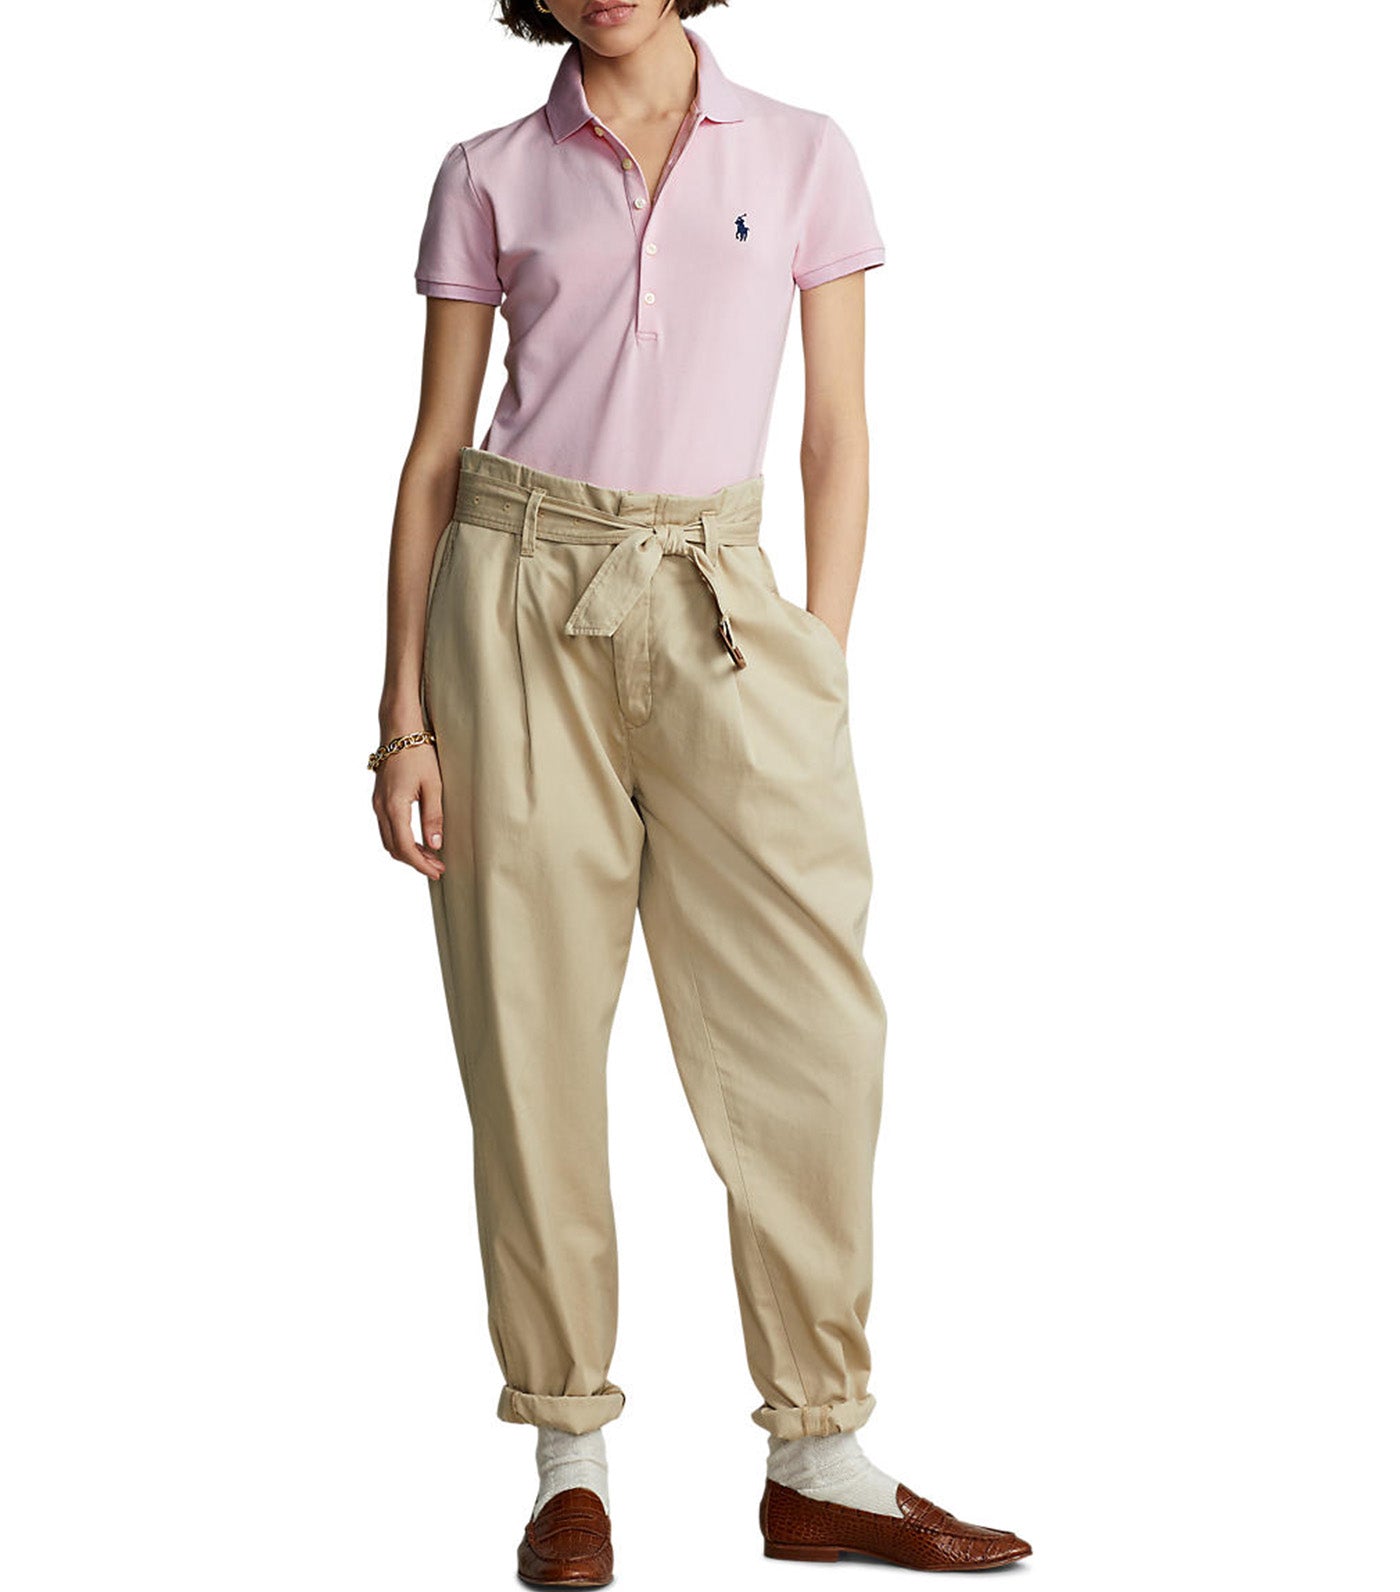 Women's Slim Fit Stretch Julie Polo Shirt Pink